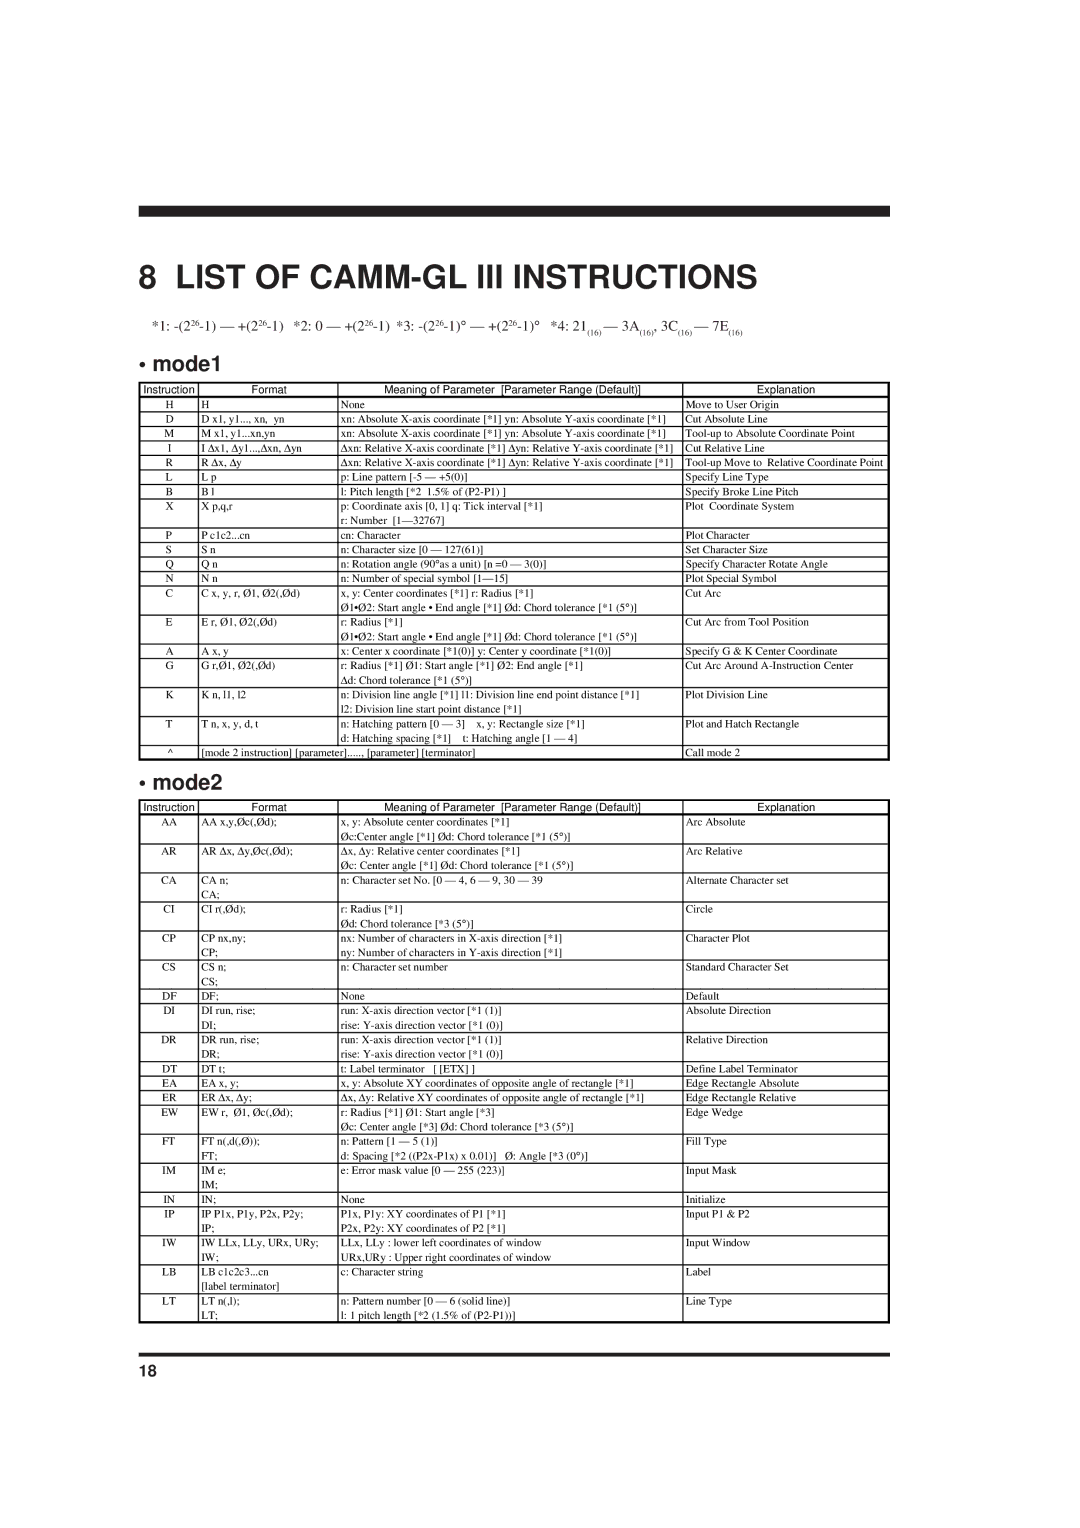 Roland PNC-900 user manual List of CAMM-GL III Instructions, Mode1, Mode2 